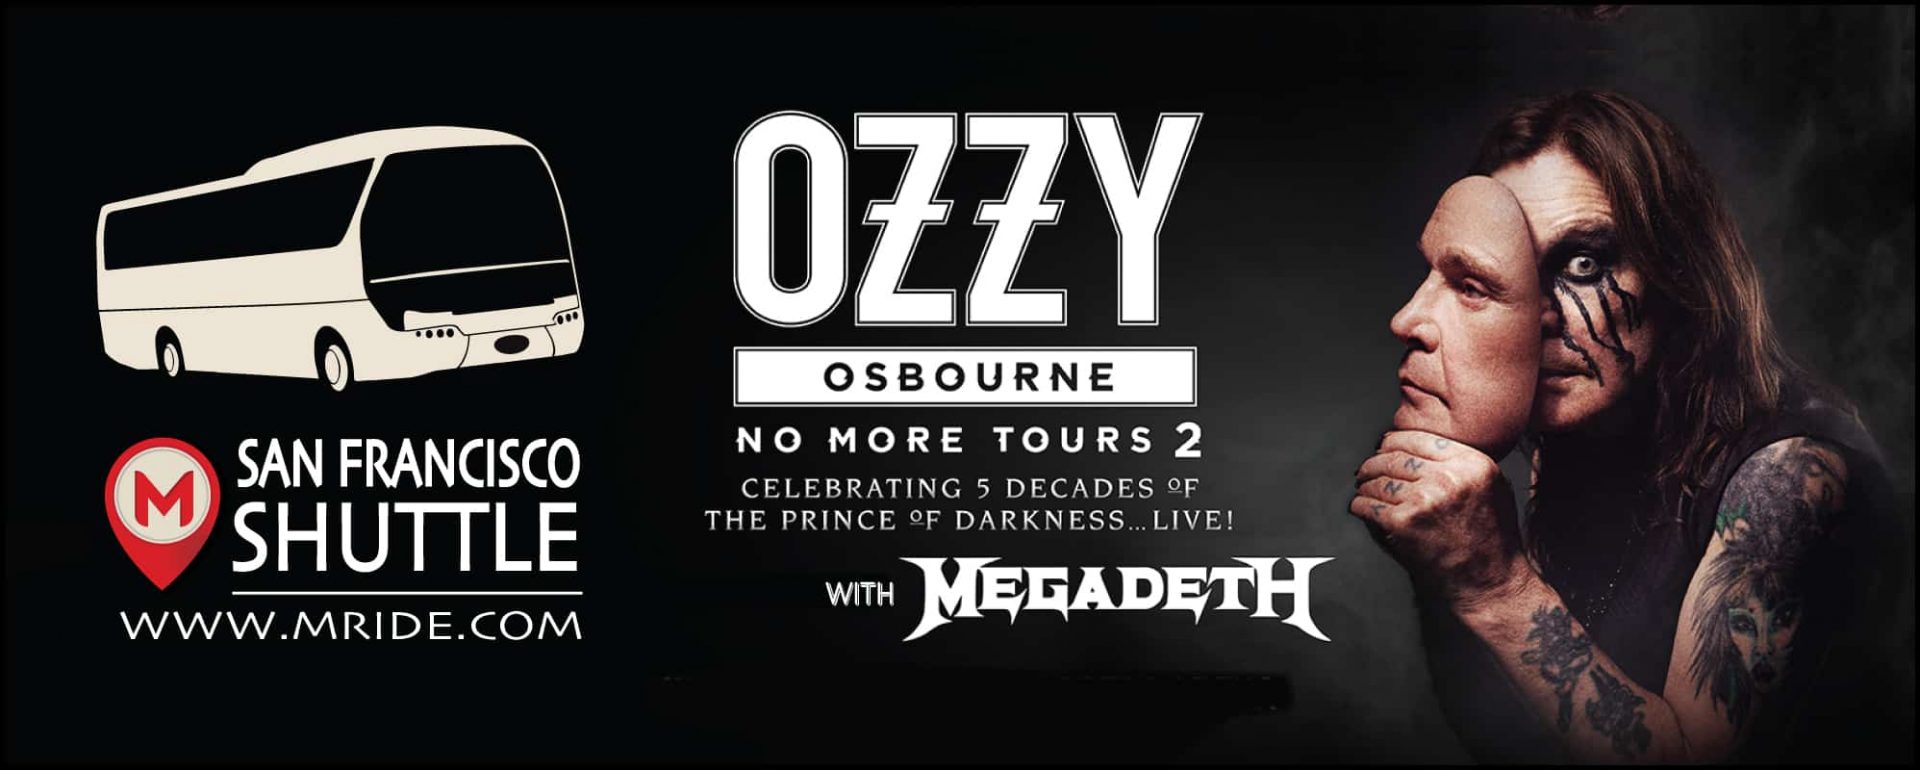 Ozzy Osbourne Concert Shuttle